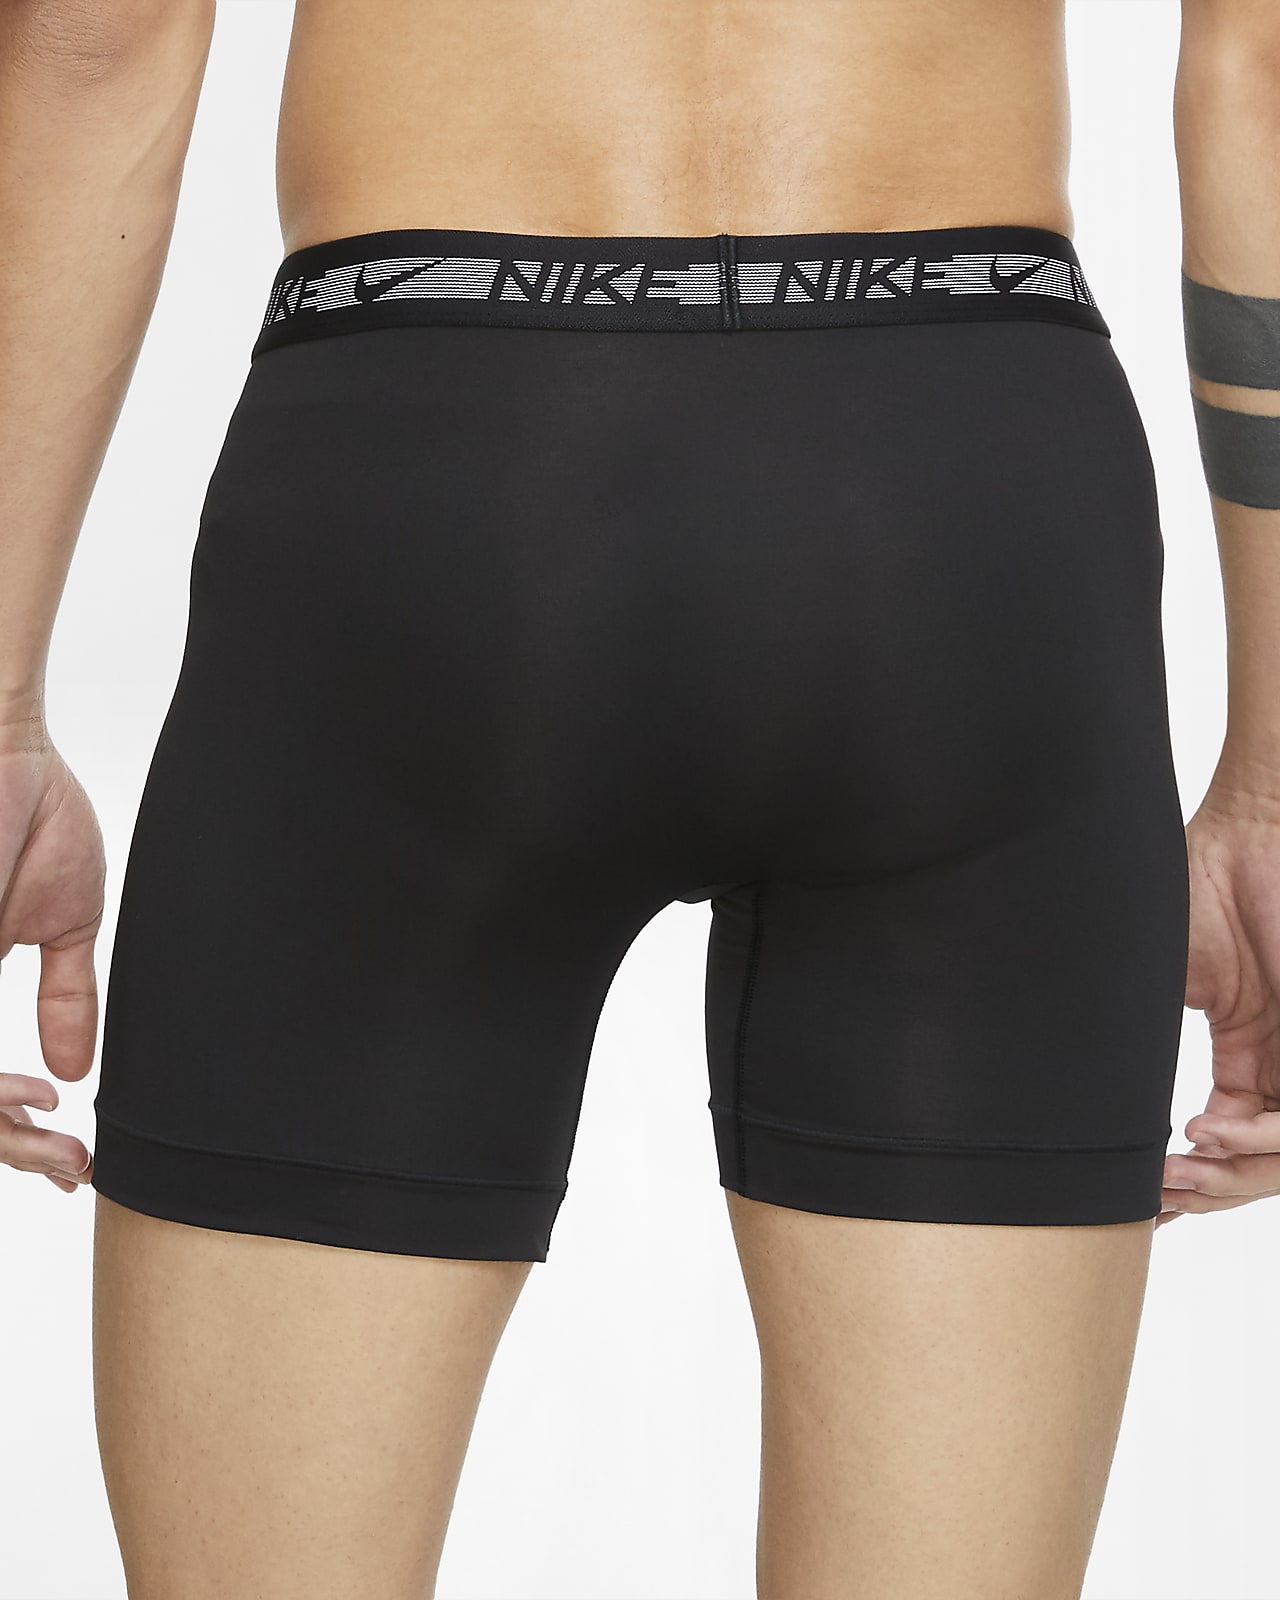 nike performance underwear,Save up to 17%,www.ilcascinone.com